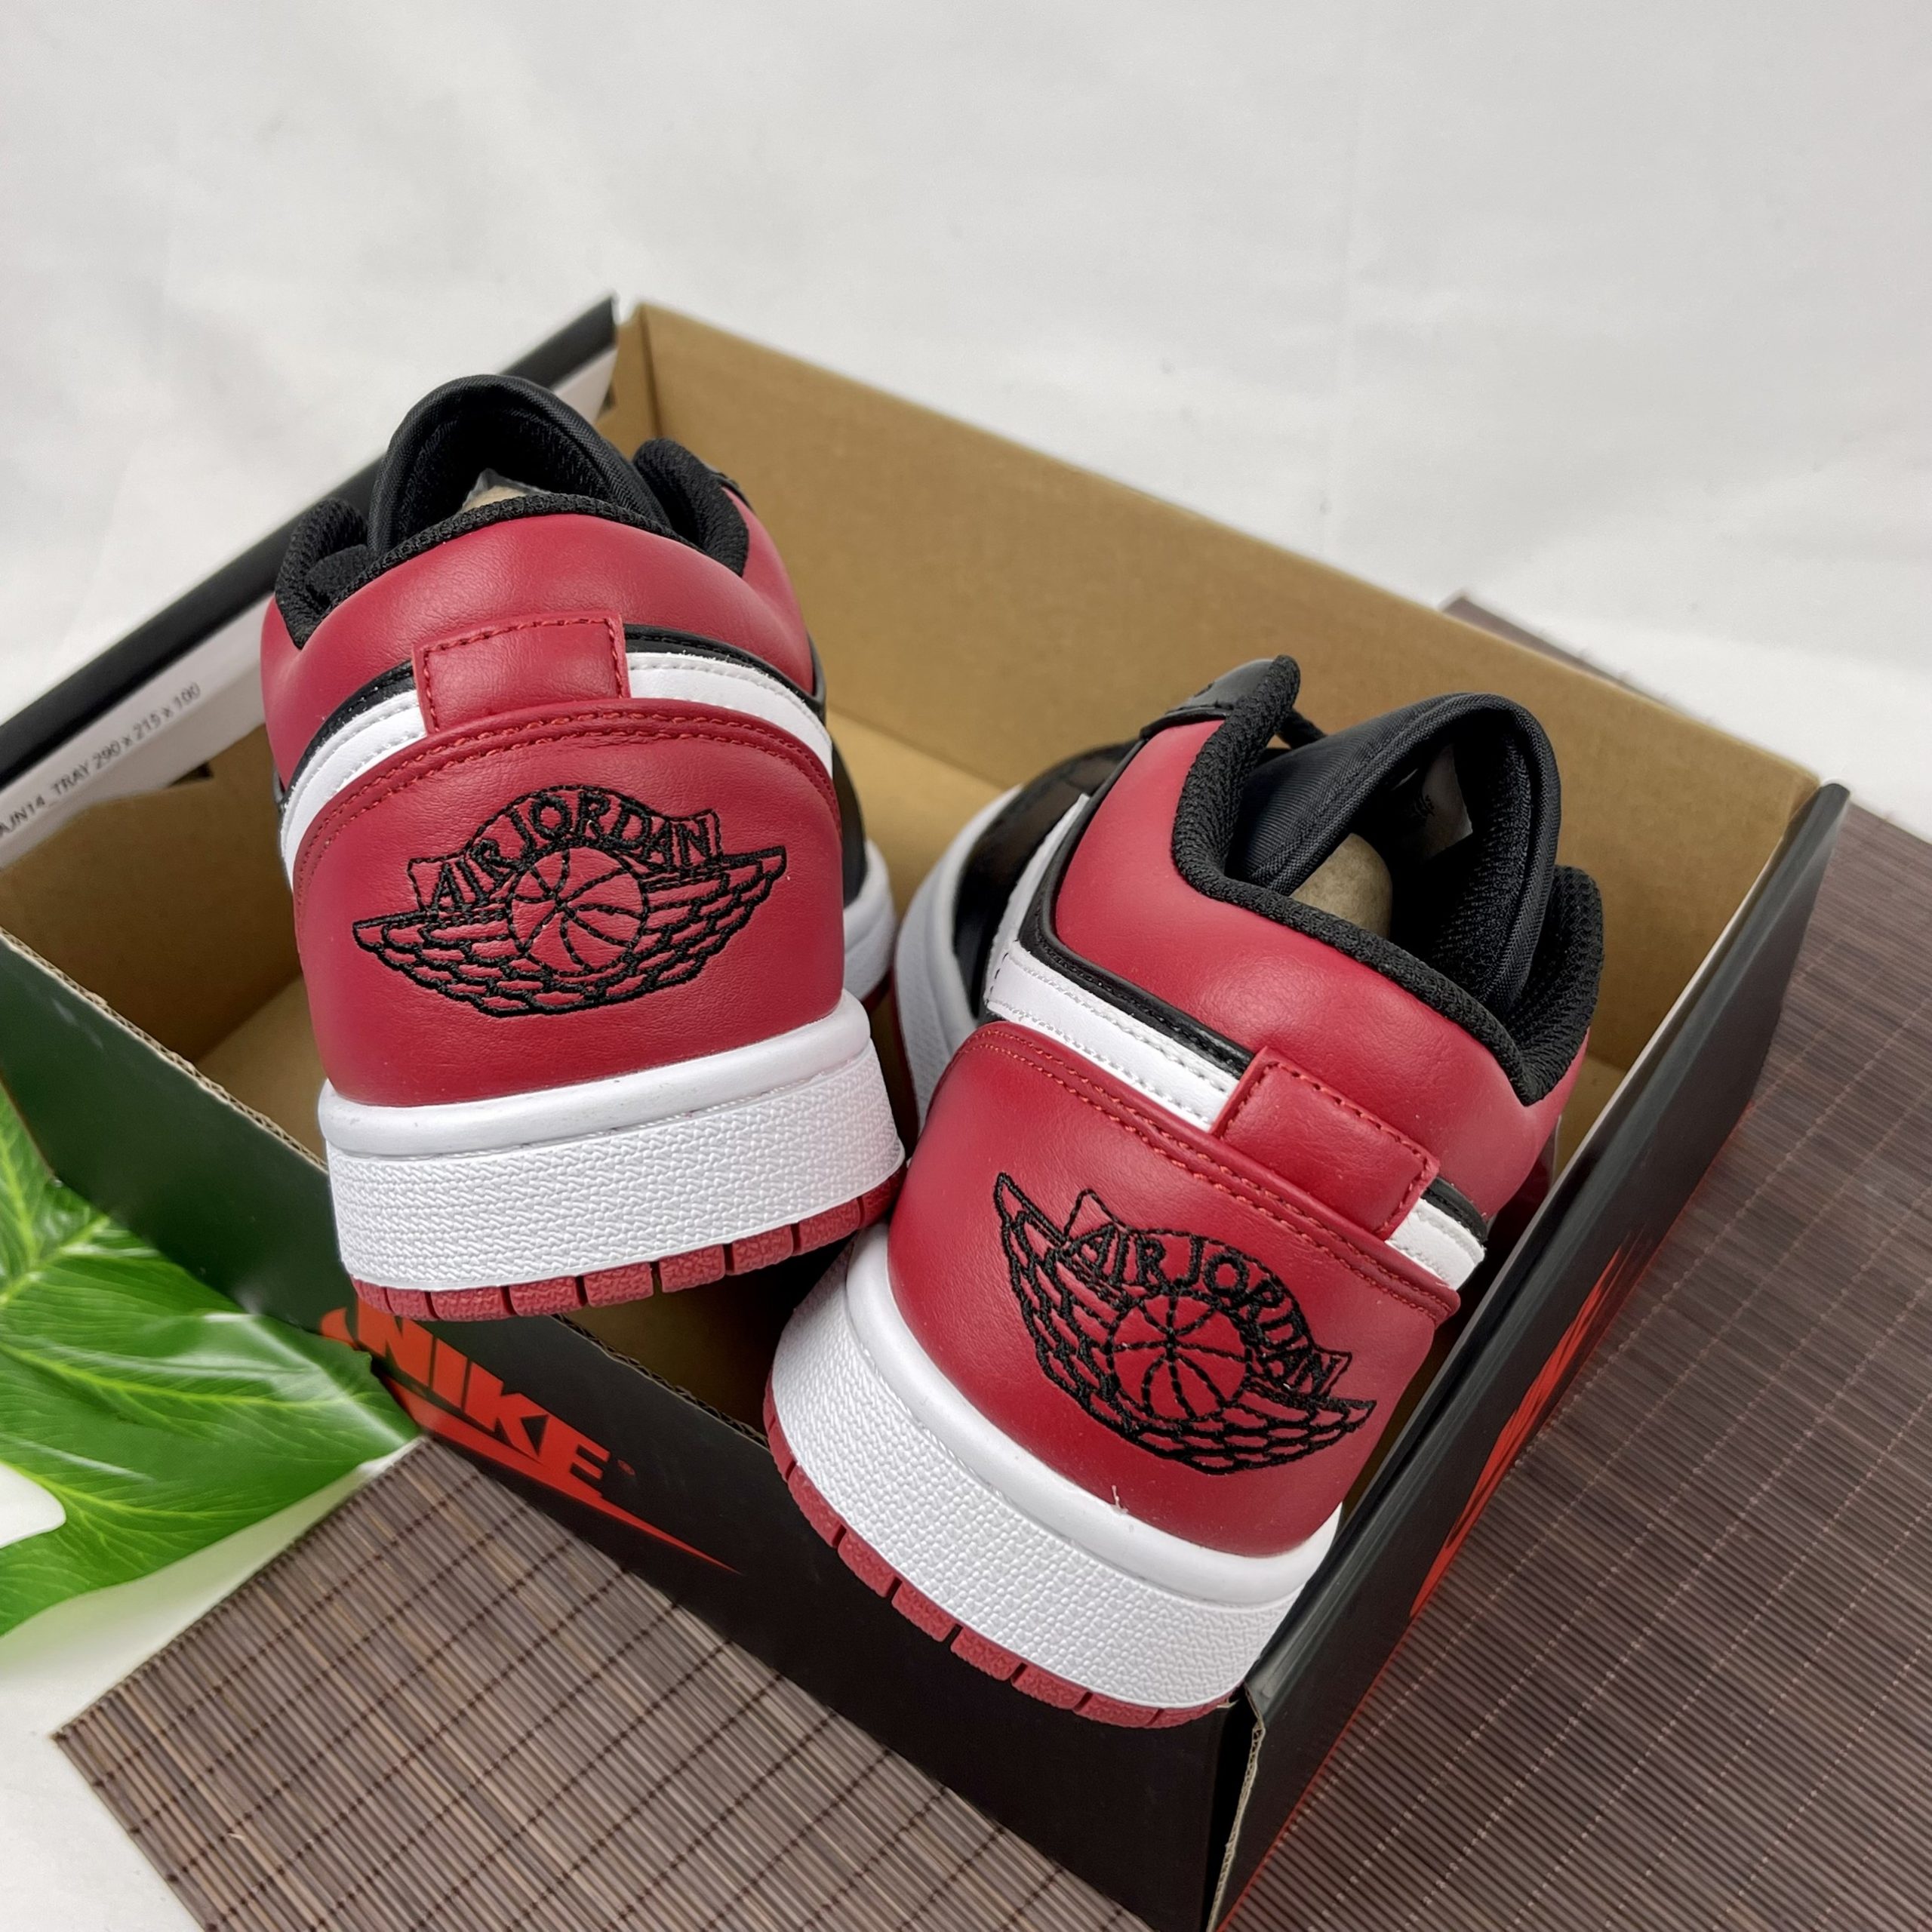 Giày Nike Air Jordan 1 Low Alternate Đỏ Đen